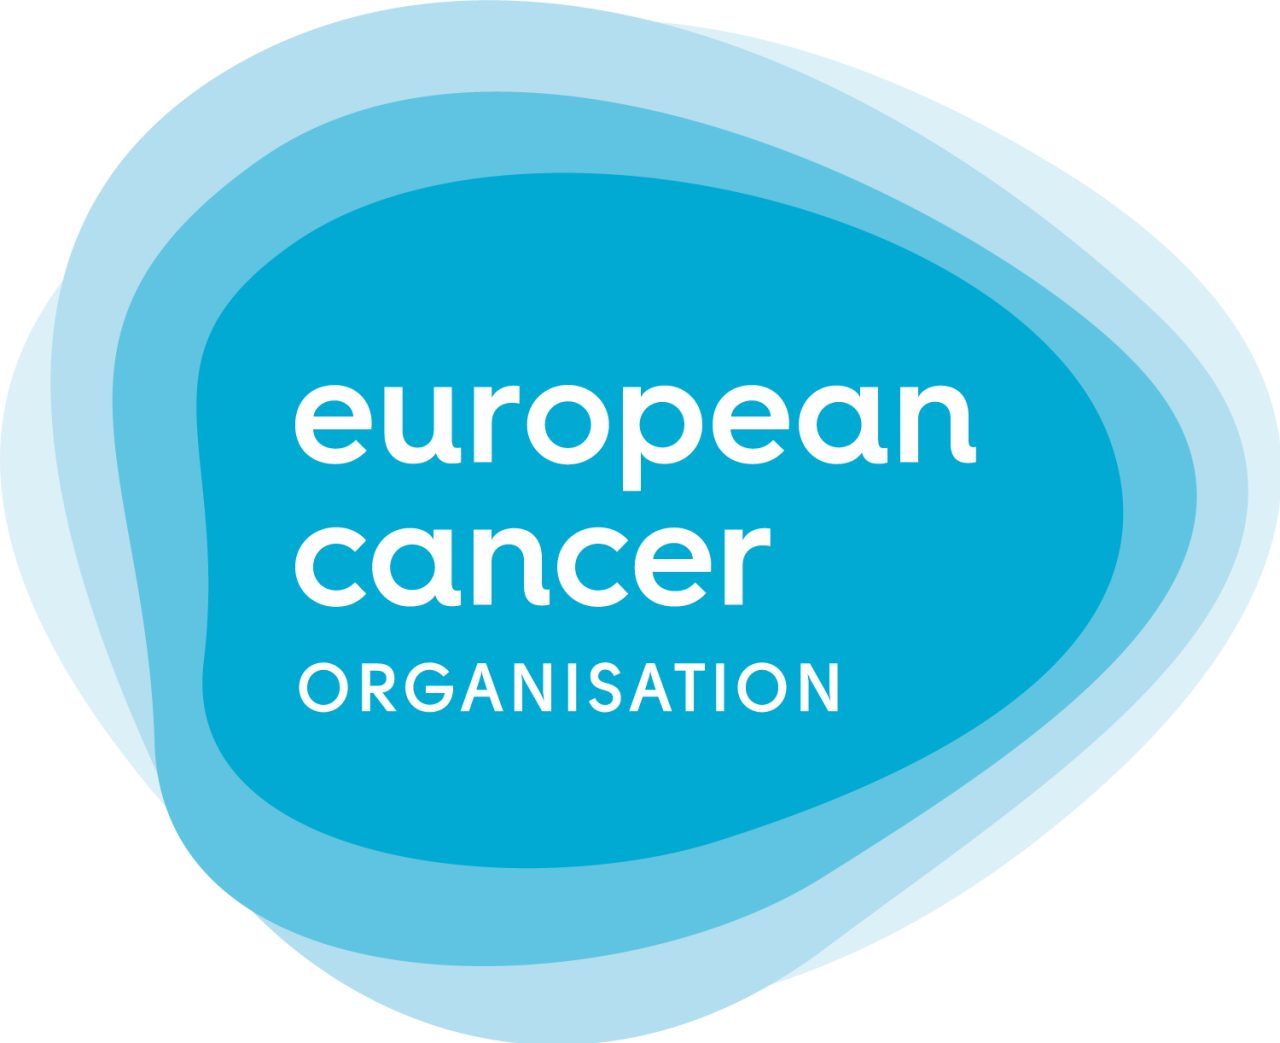 Montenegro joined the EU4Health program – European Cancer Organisation